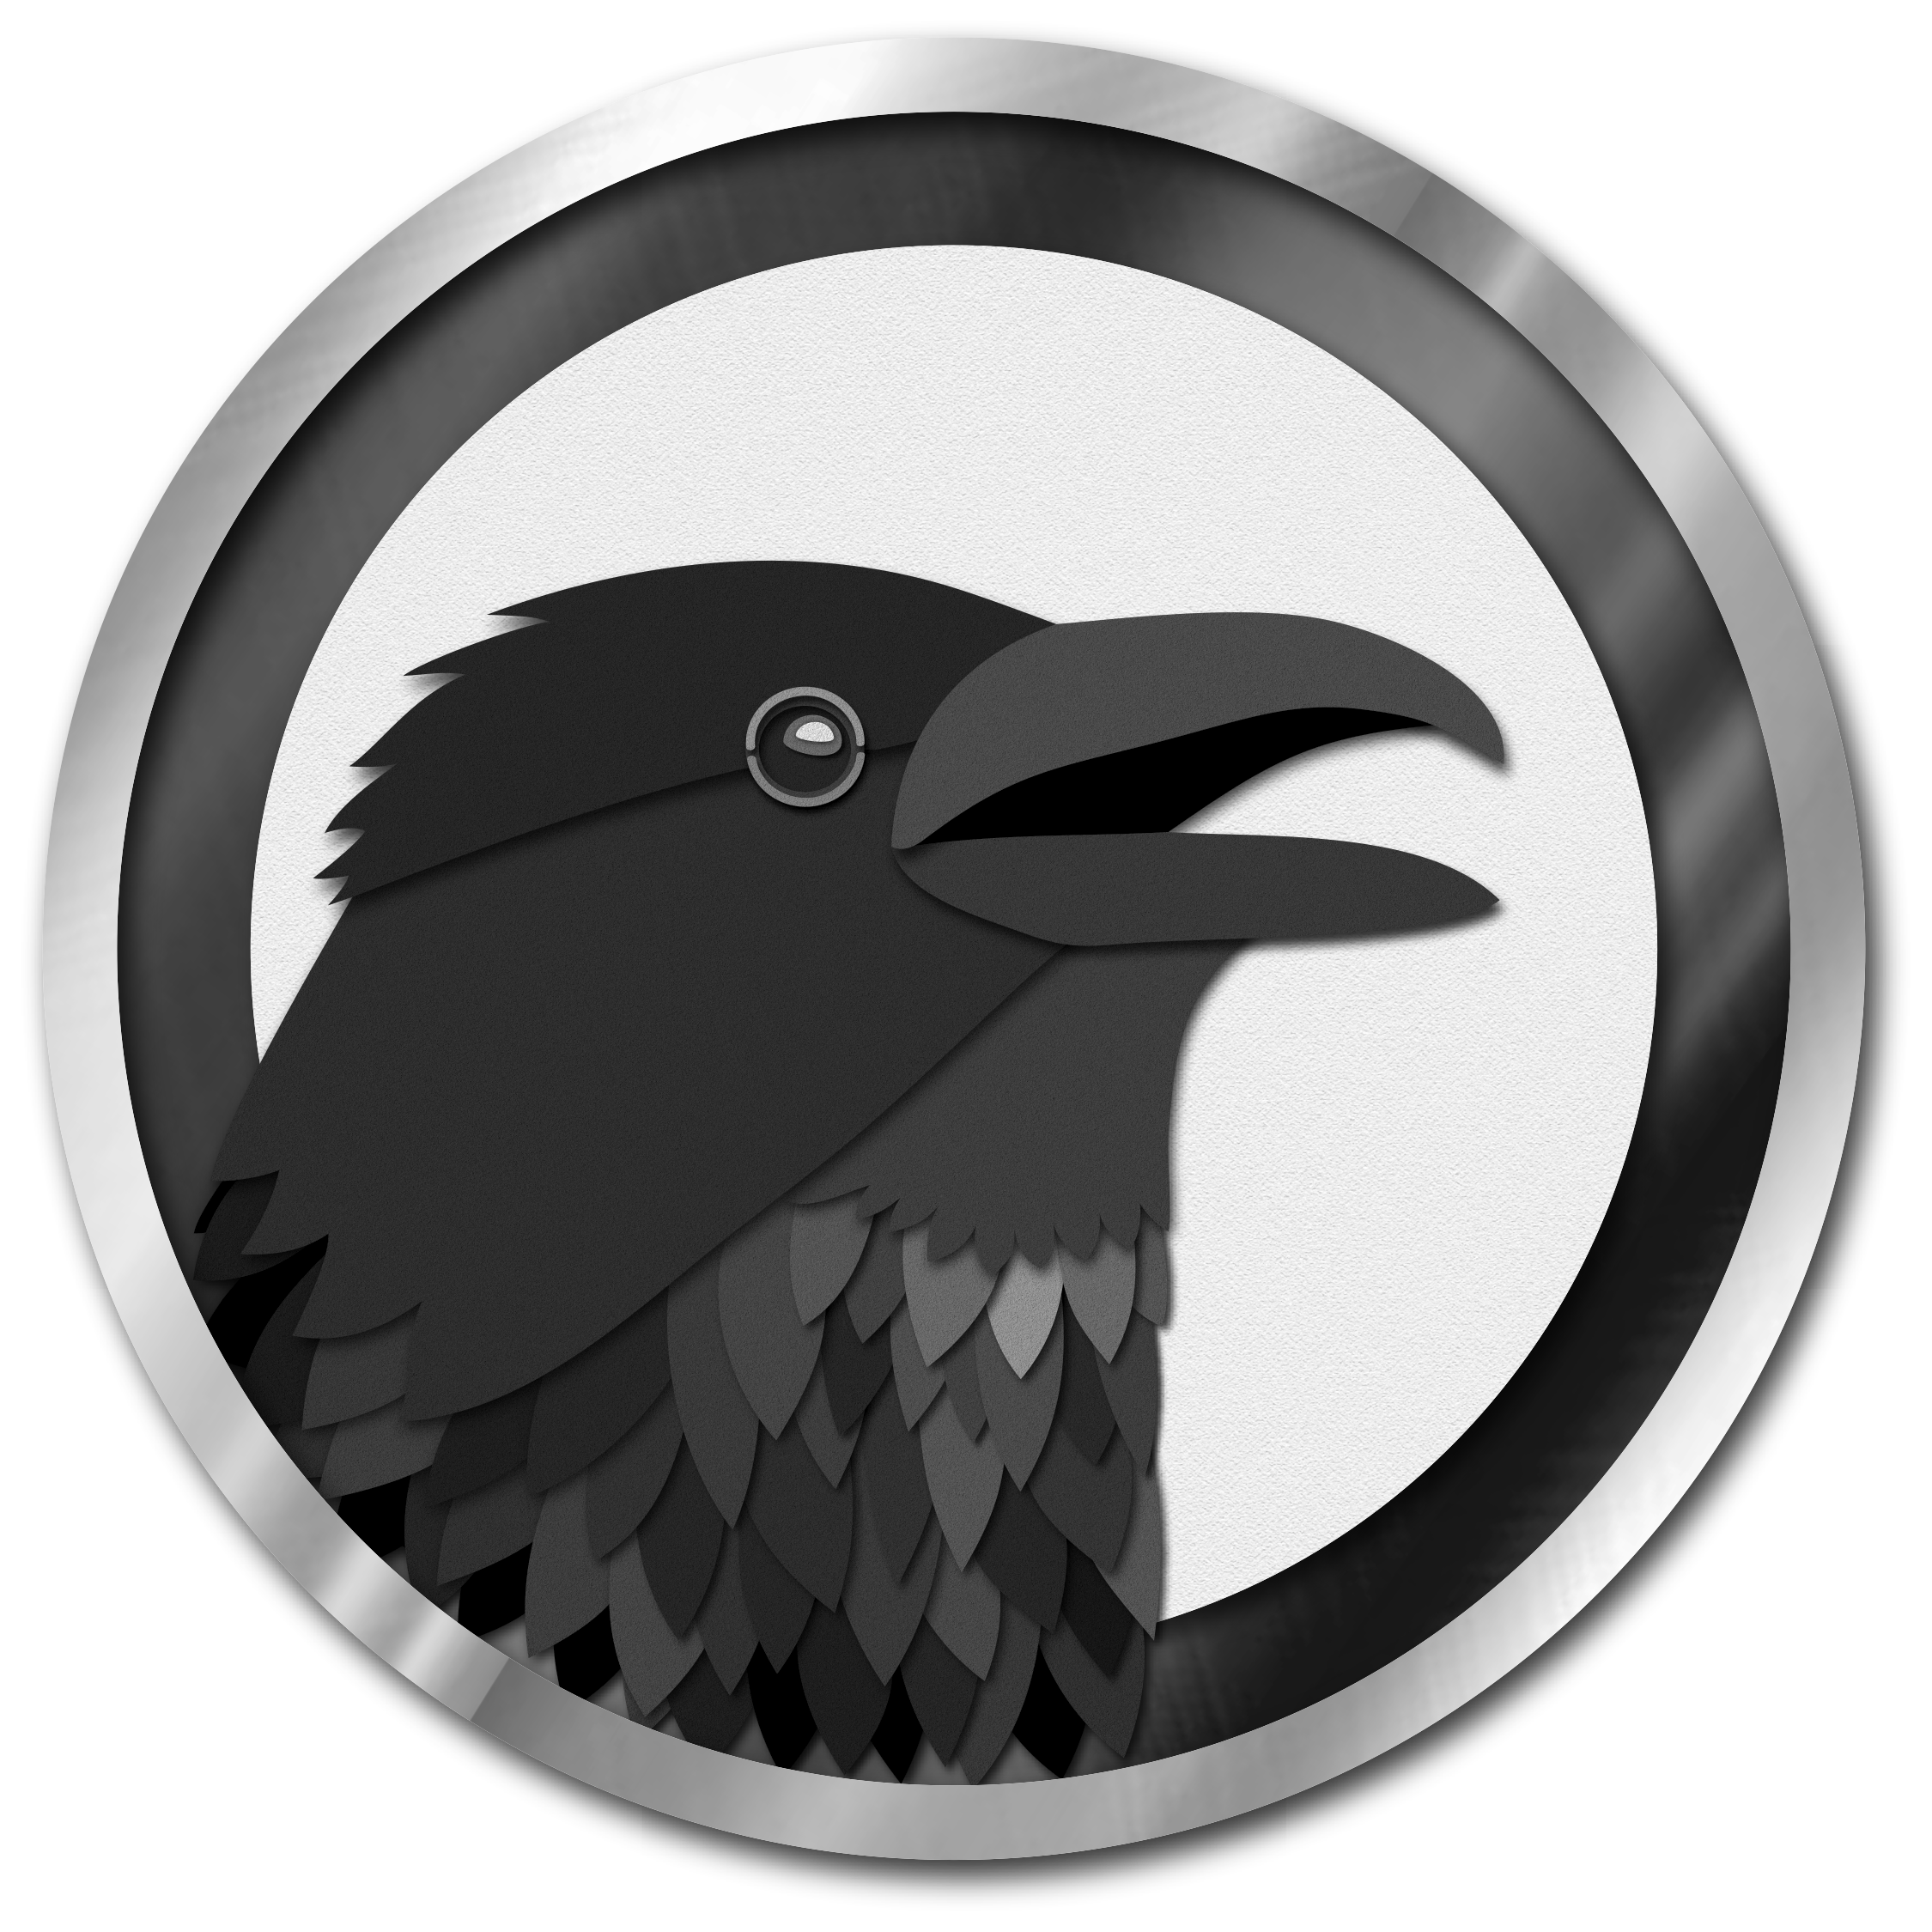 About the Raven Post – Corvo Correio | the Raven Post